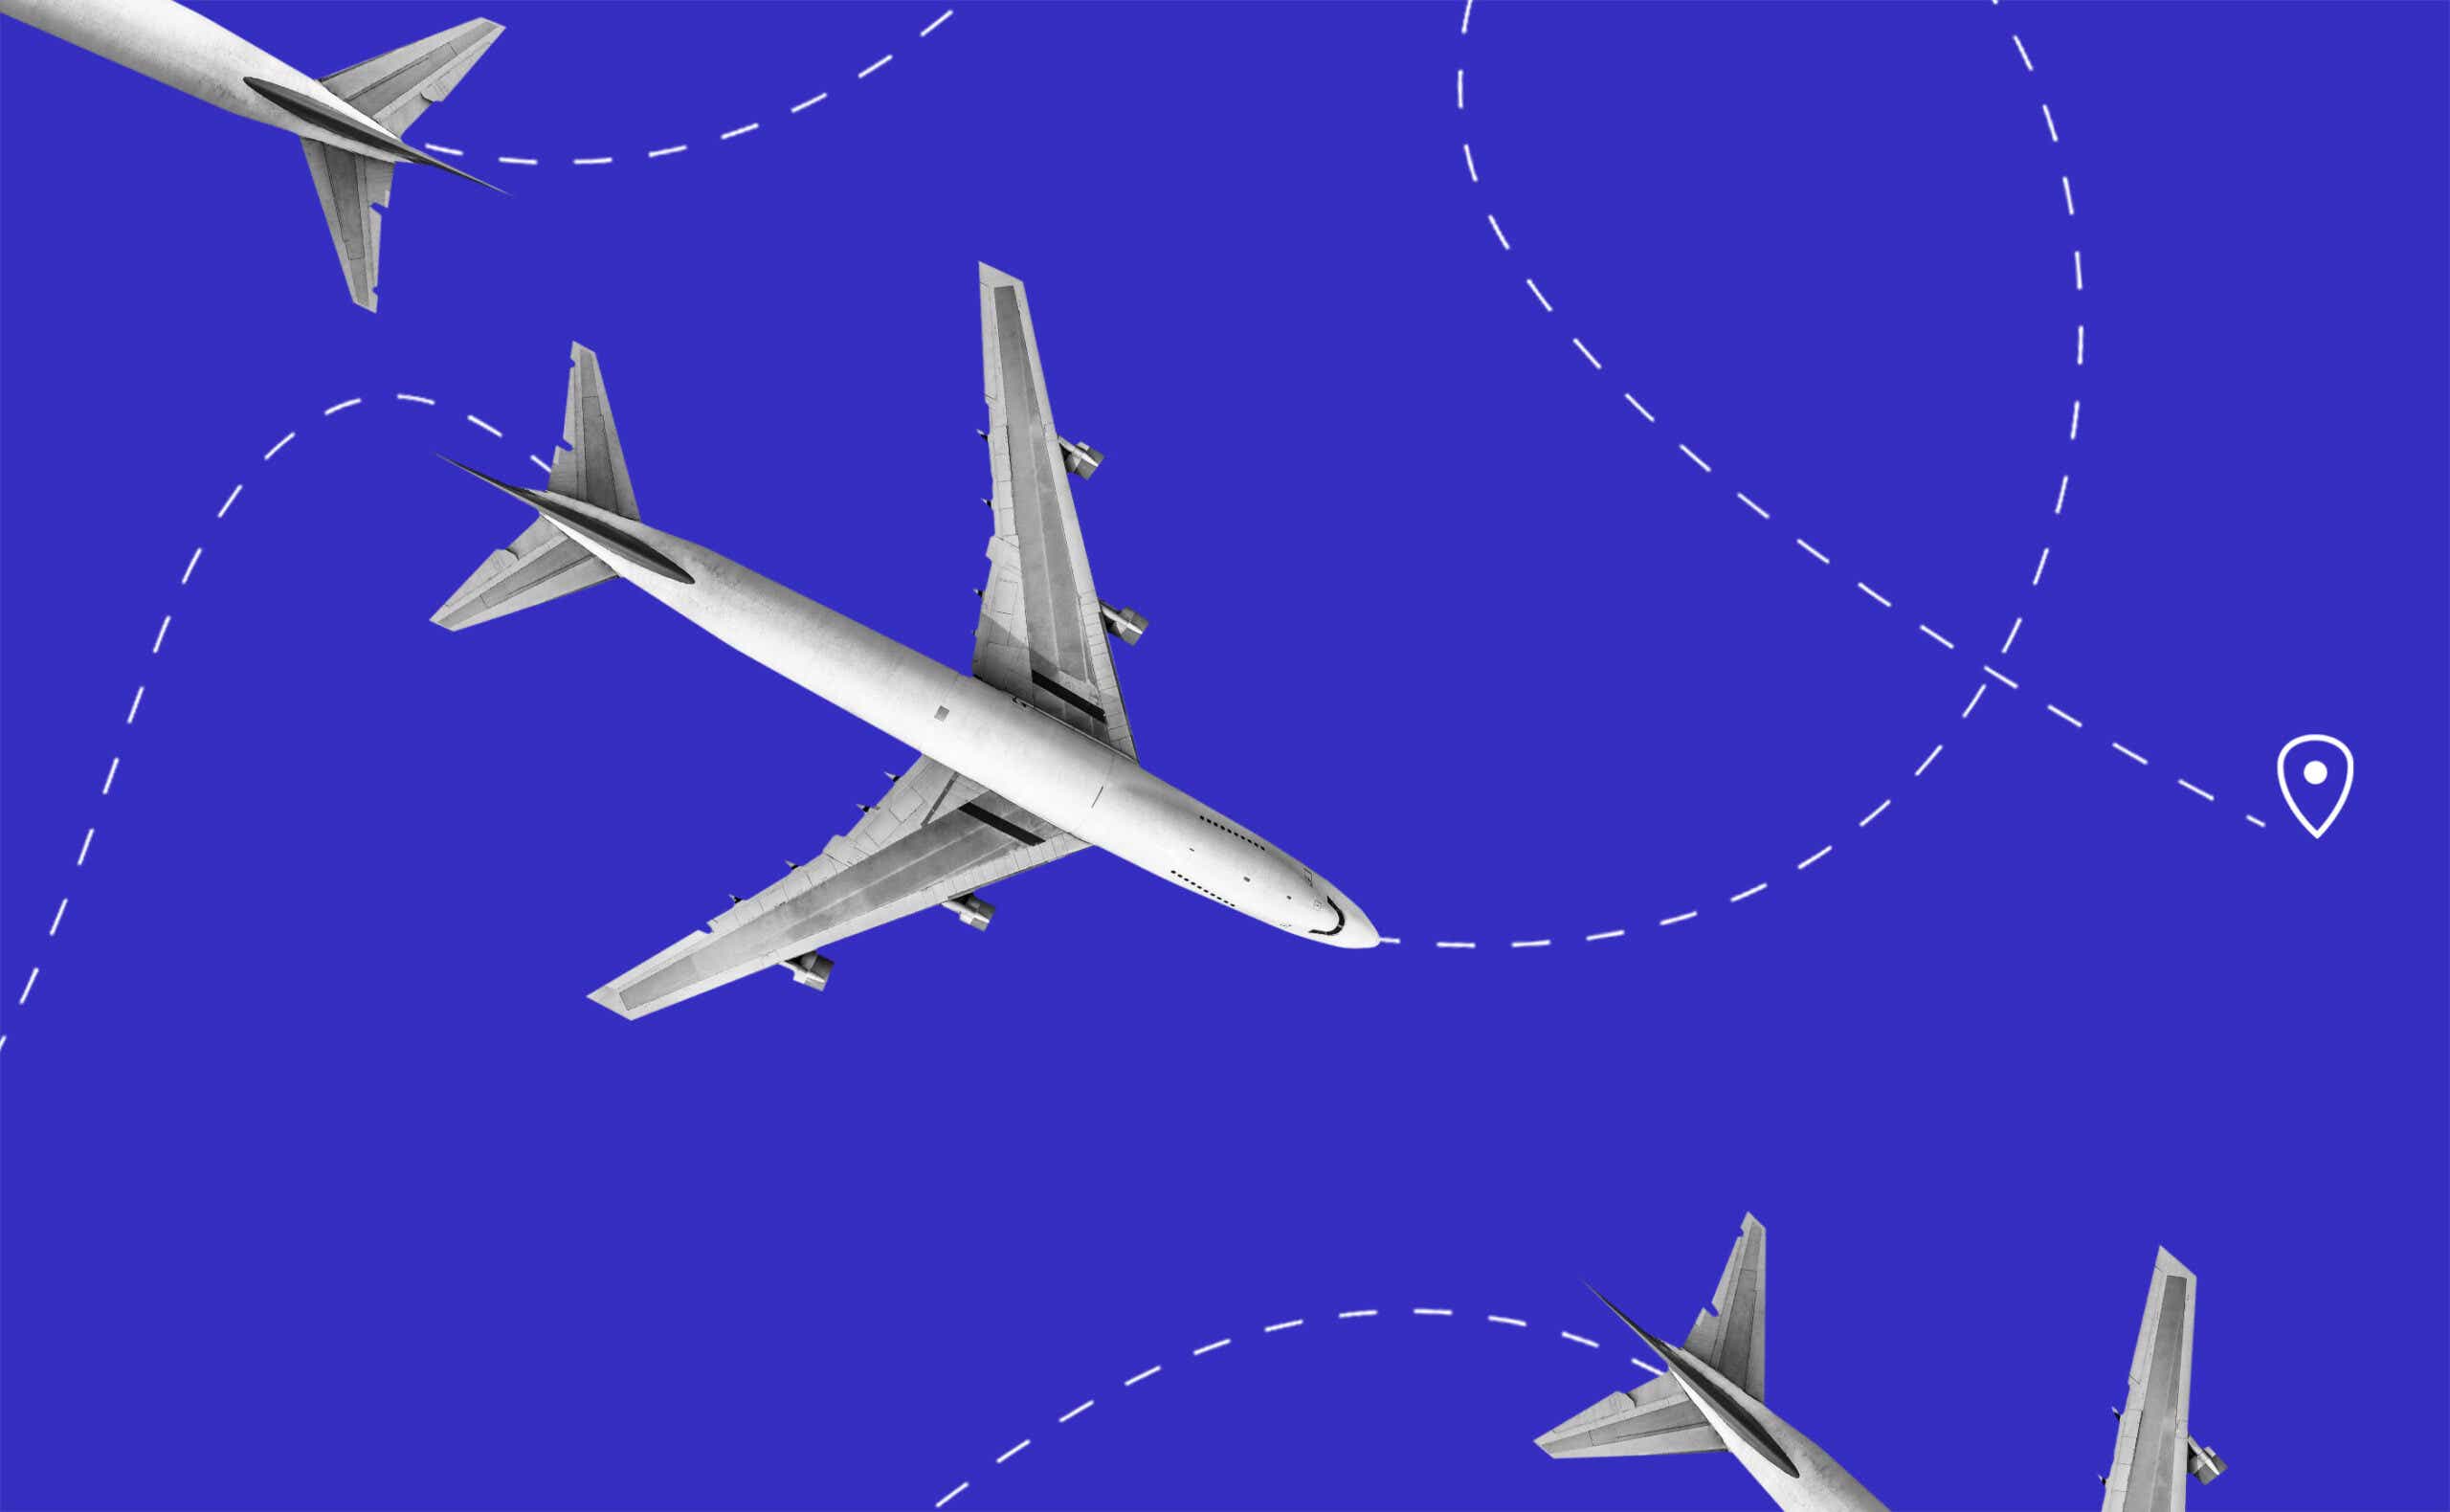 An airplane's flight path